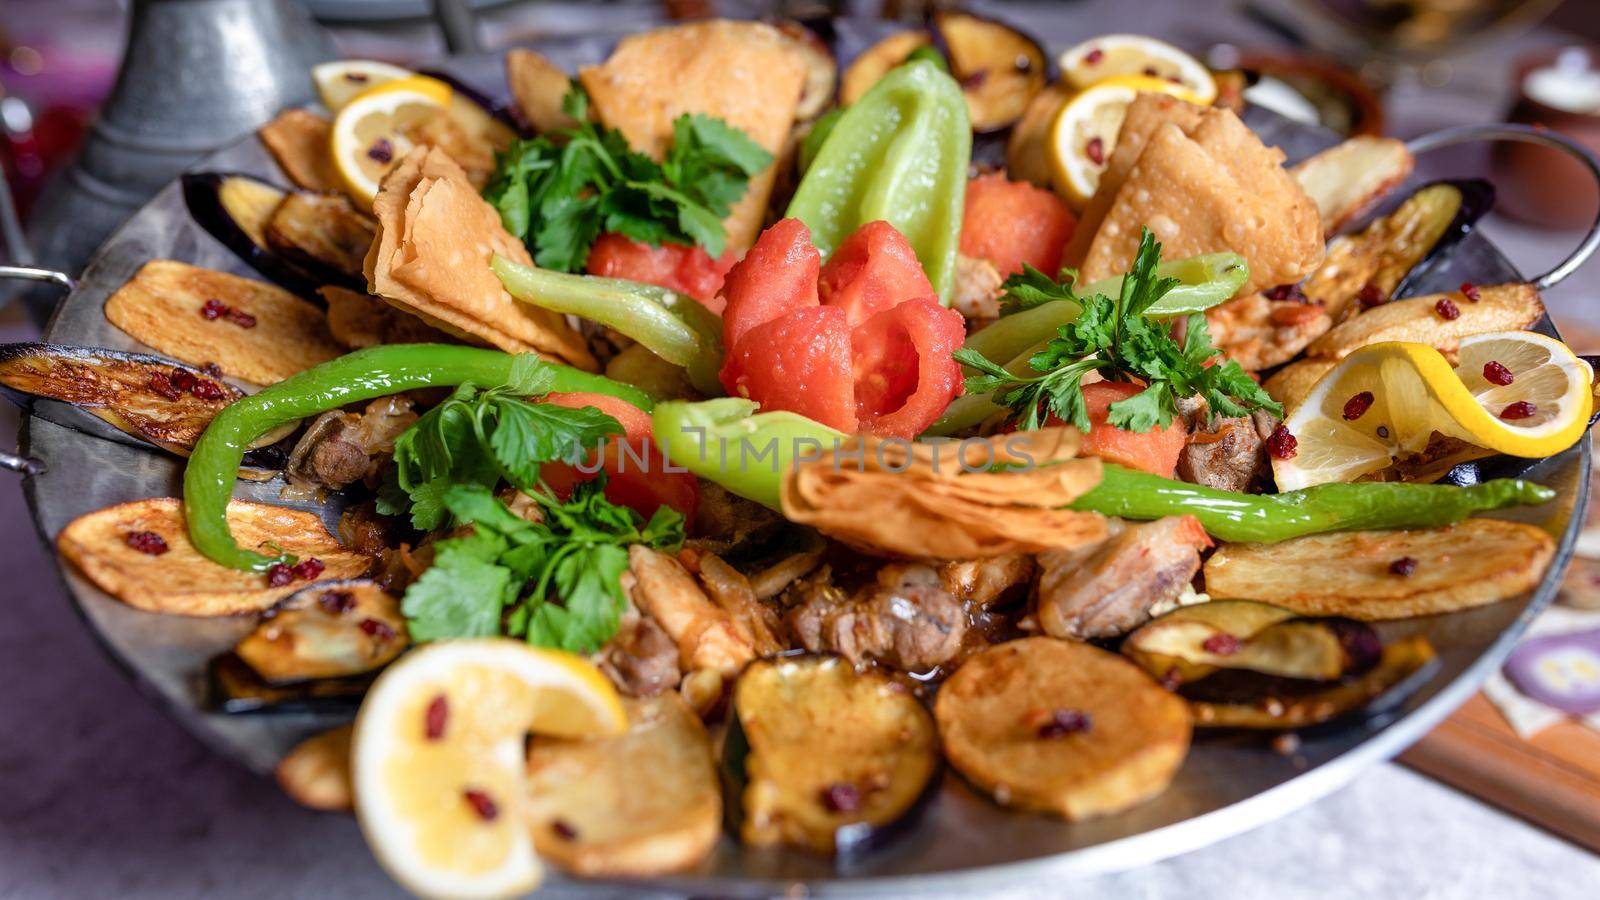 Sac ichi meat and vegetable meal, Azerbaijani food by ferhad